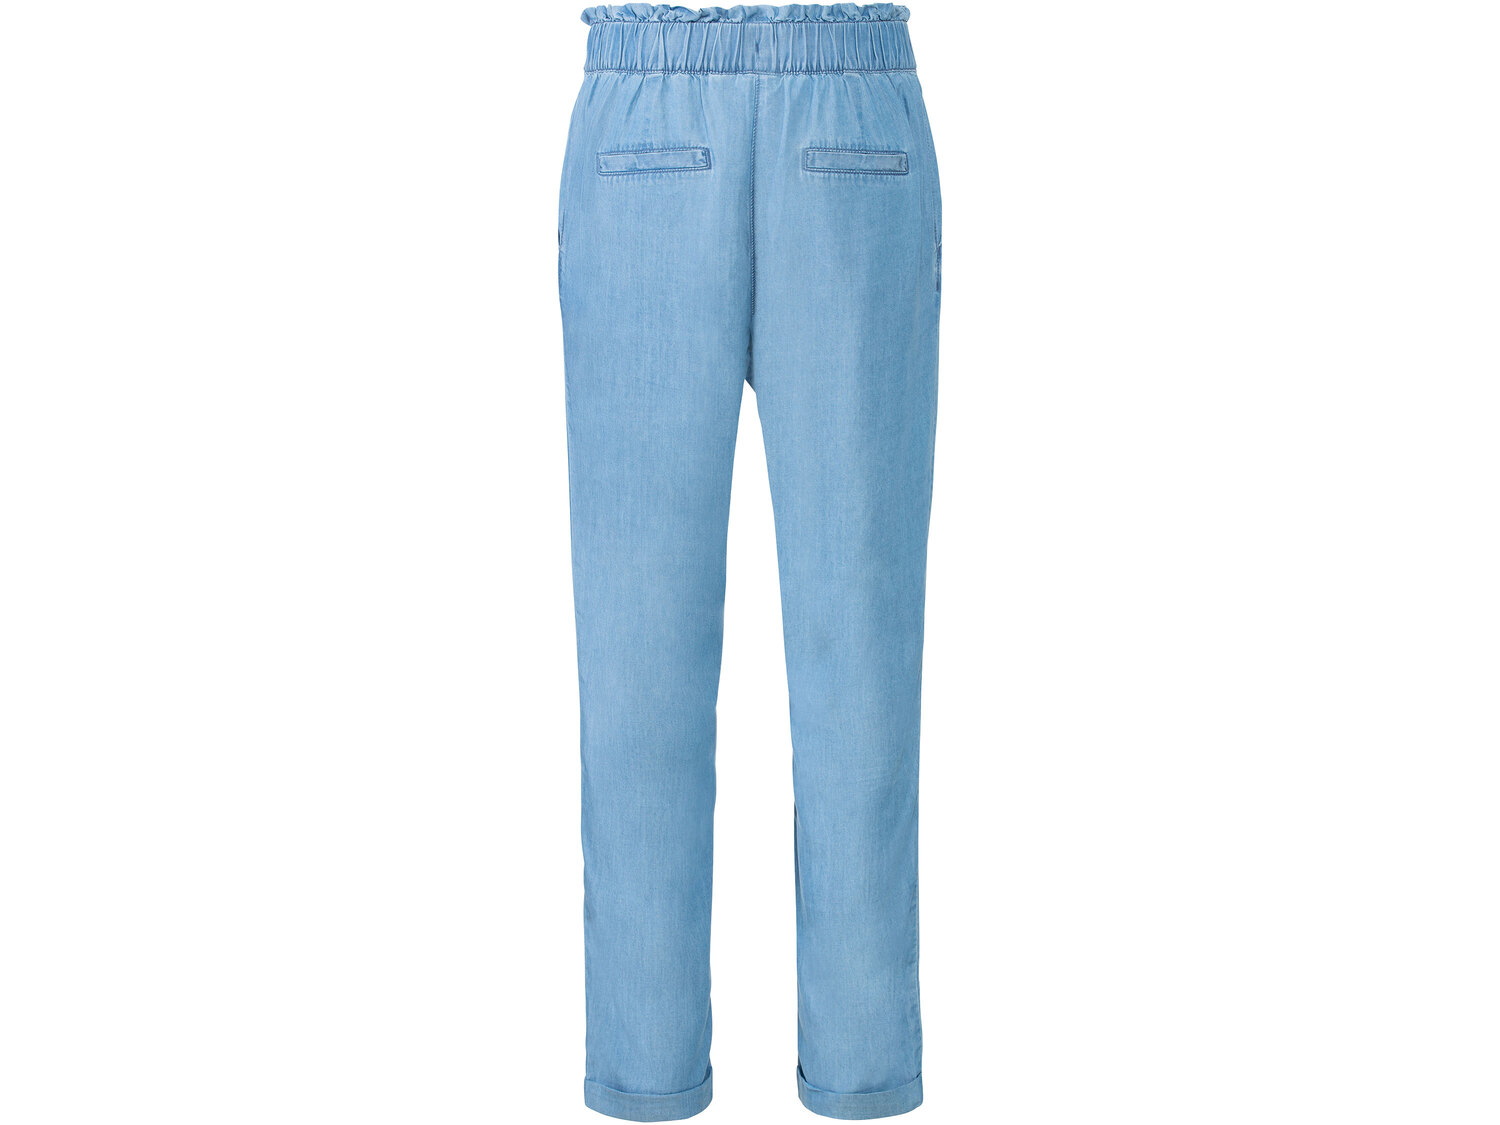 Spodnie damskie z lyocellu Esmara, cena 44,99 PLN 
- rozmiary: 34-44
- 100% lyocellu
- ...